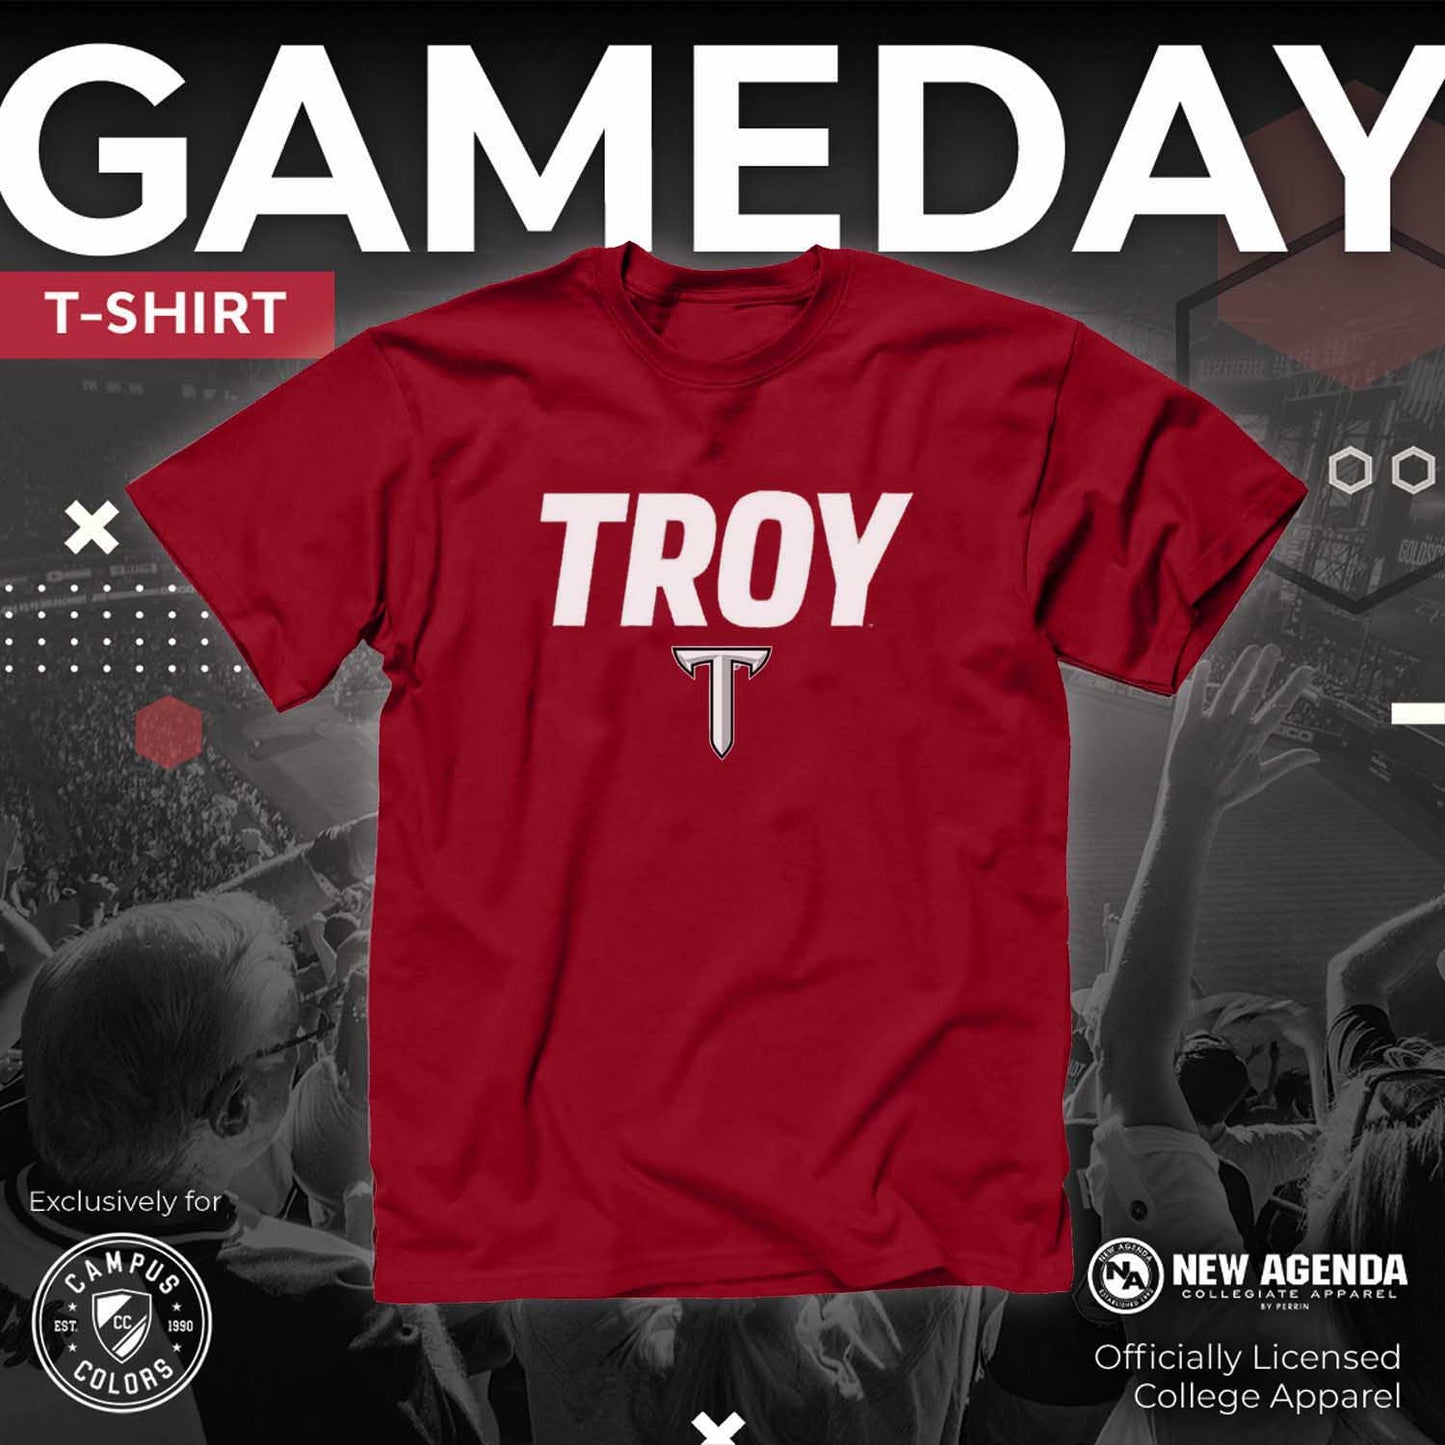 Troy Trojans NCAA Adult Gameday Cotton T-Shirt - Cardinal